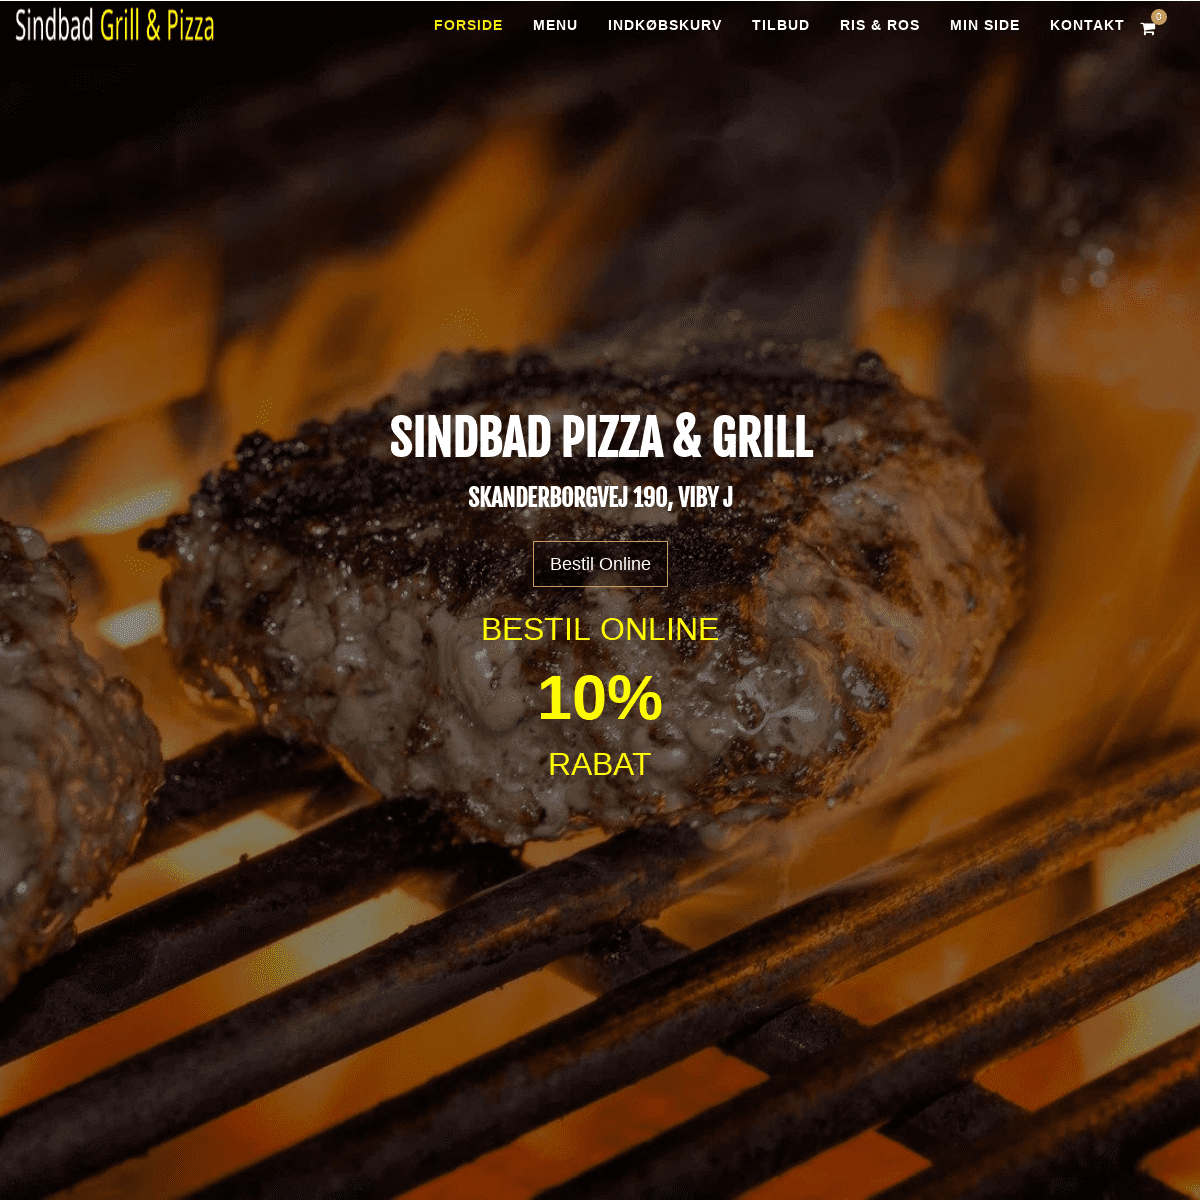 Sindbad Pizza & Grill - Pizza i Aarhus - Pizza Restaurant & Take Away - Online Bestilling